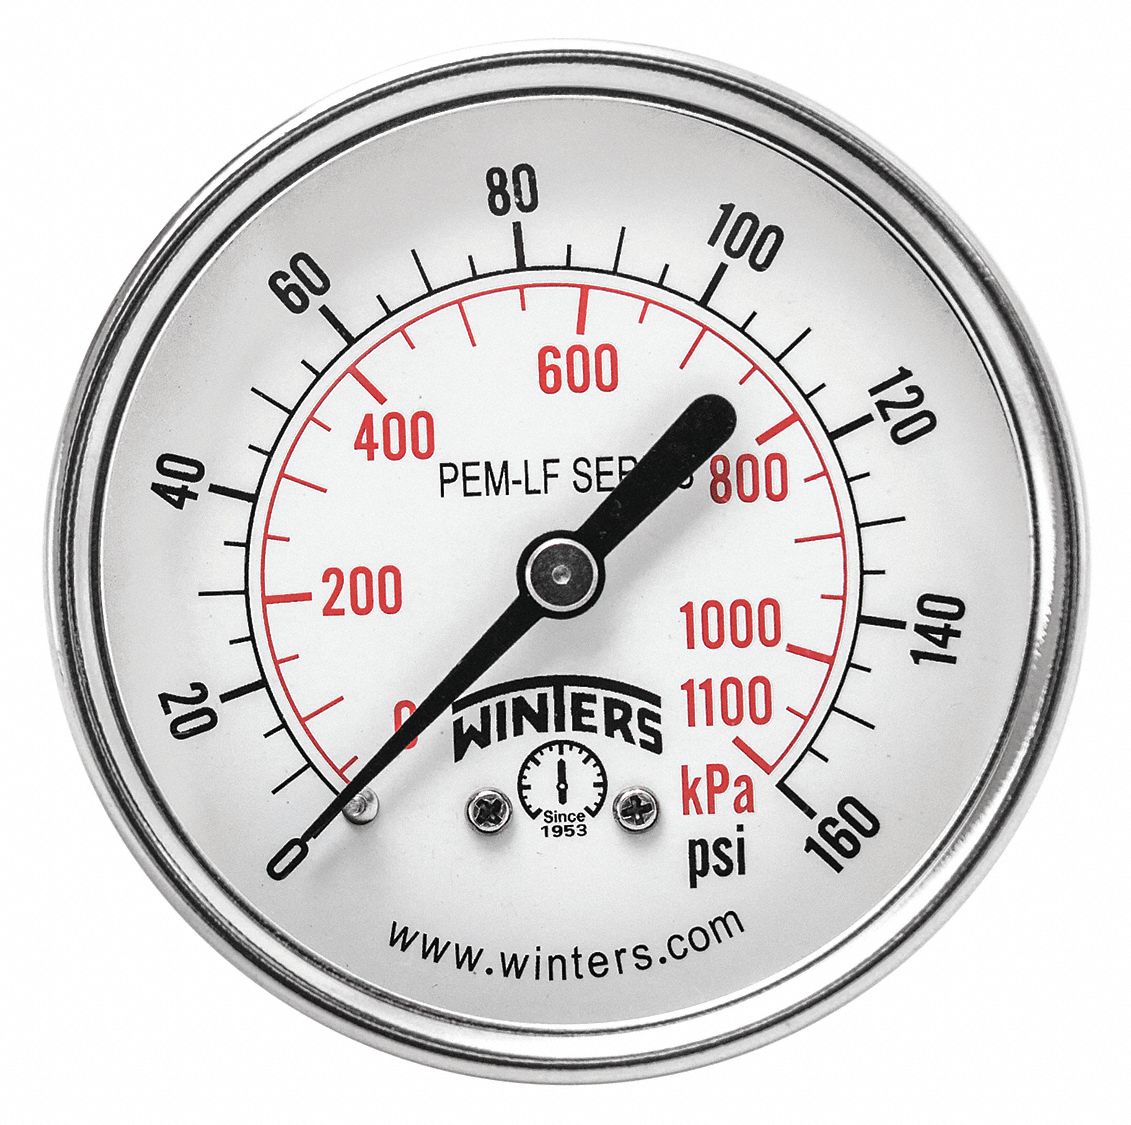 1//2/" Air Compressor Regulator with Free 300 PSI Pressure Gauge